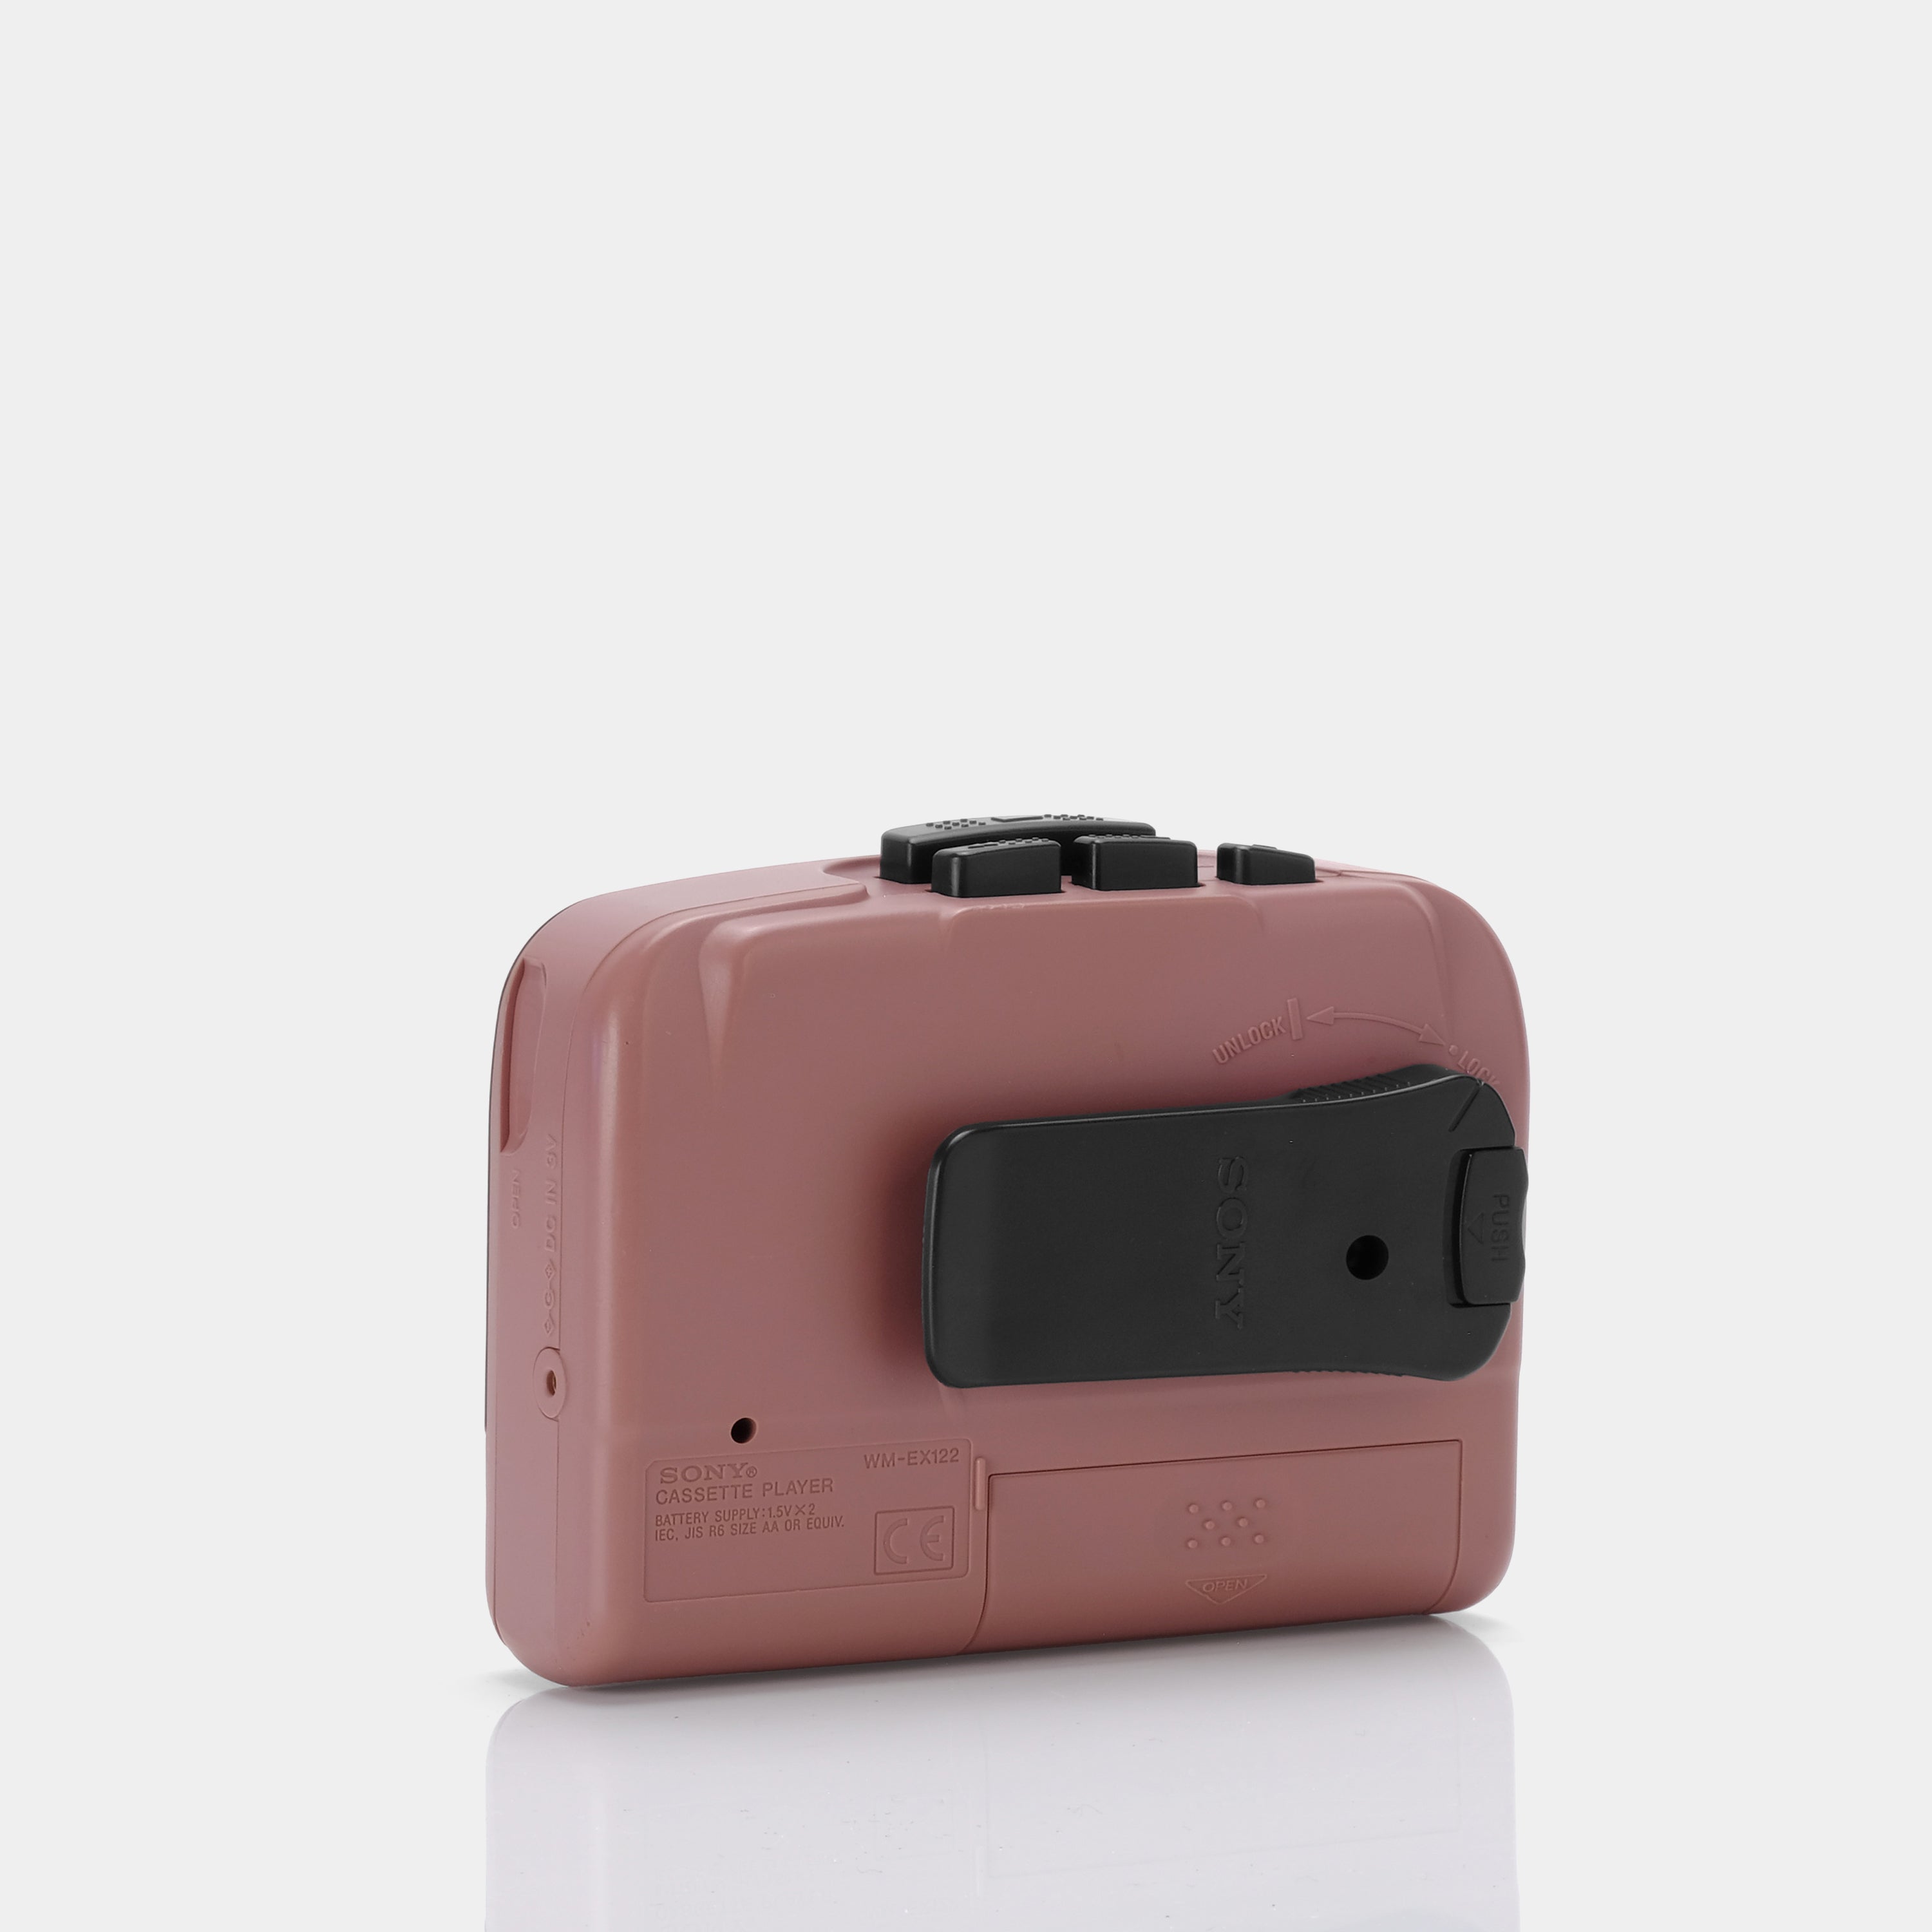 Sony Walkman WM-EX122 Pink Portable Cassette Player